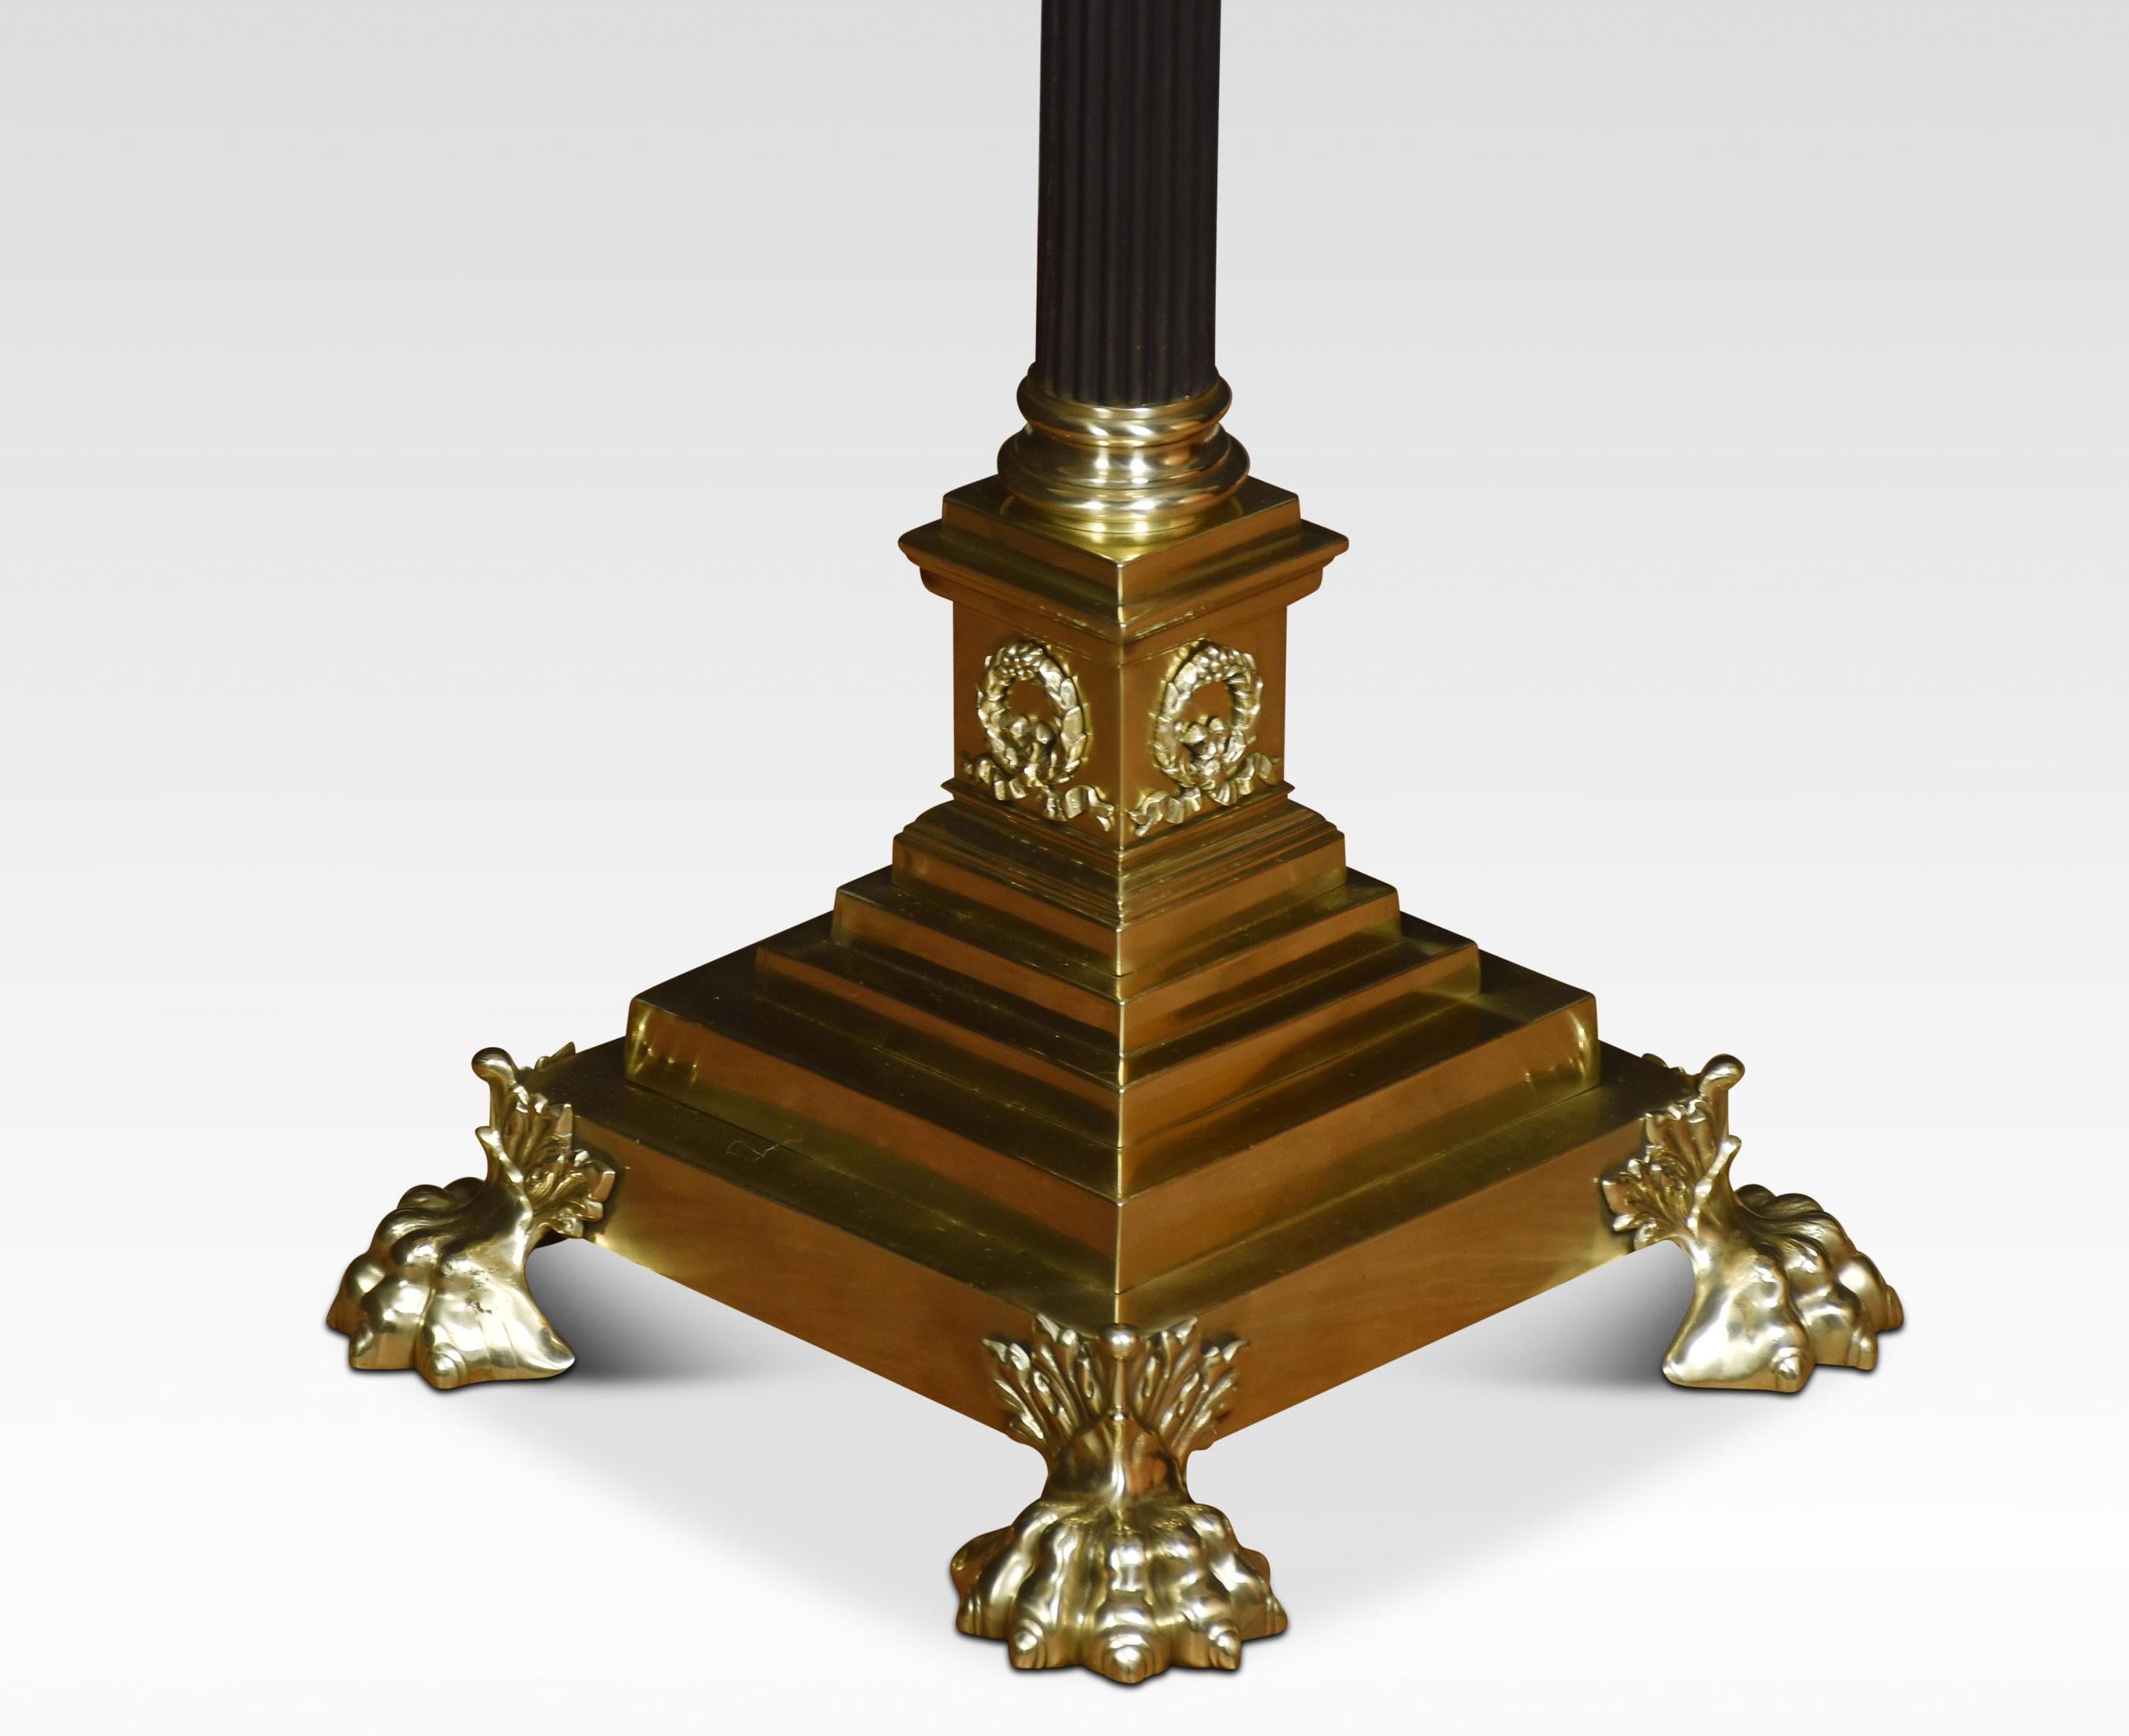 British Brass Standard Lamp